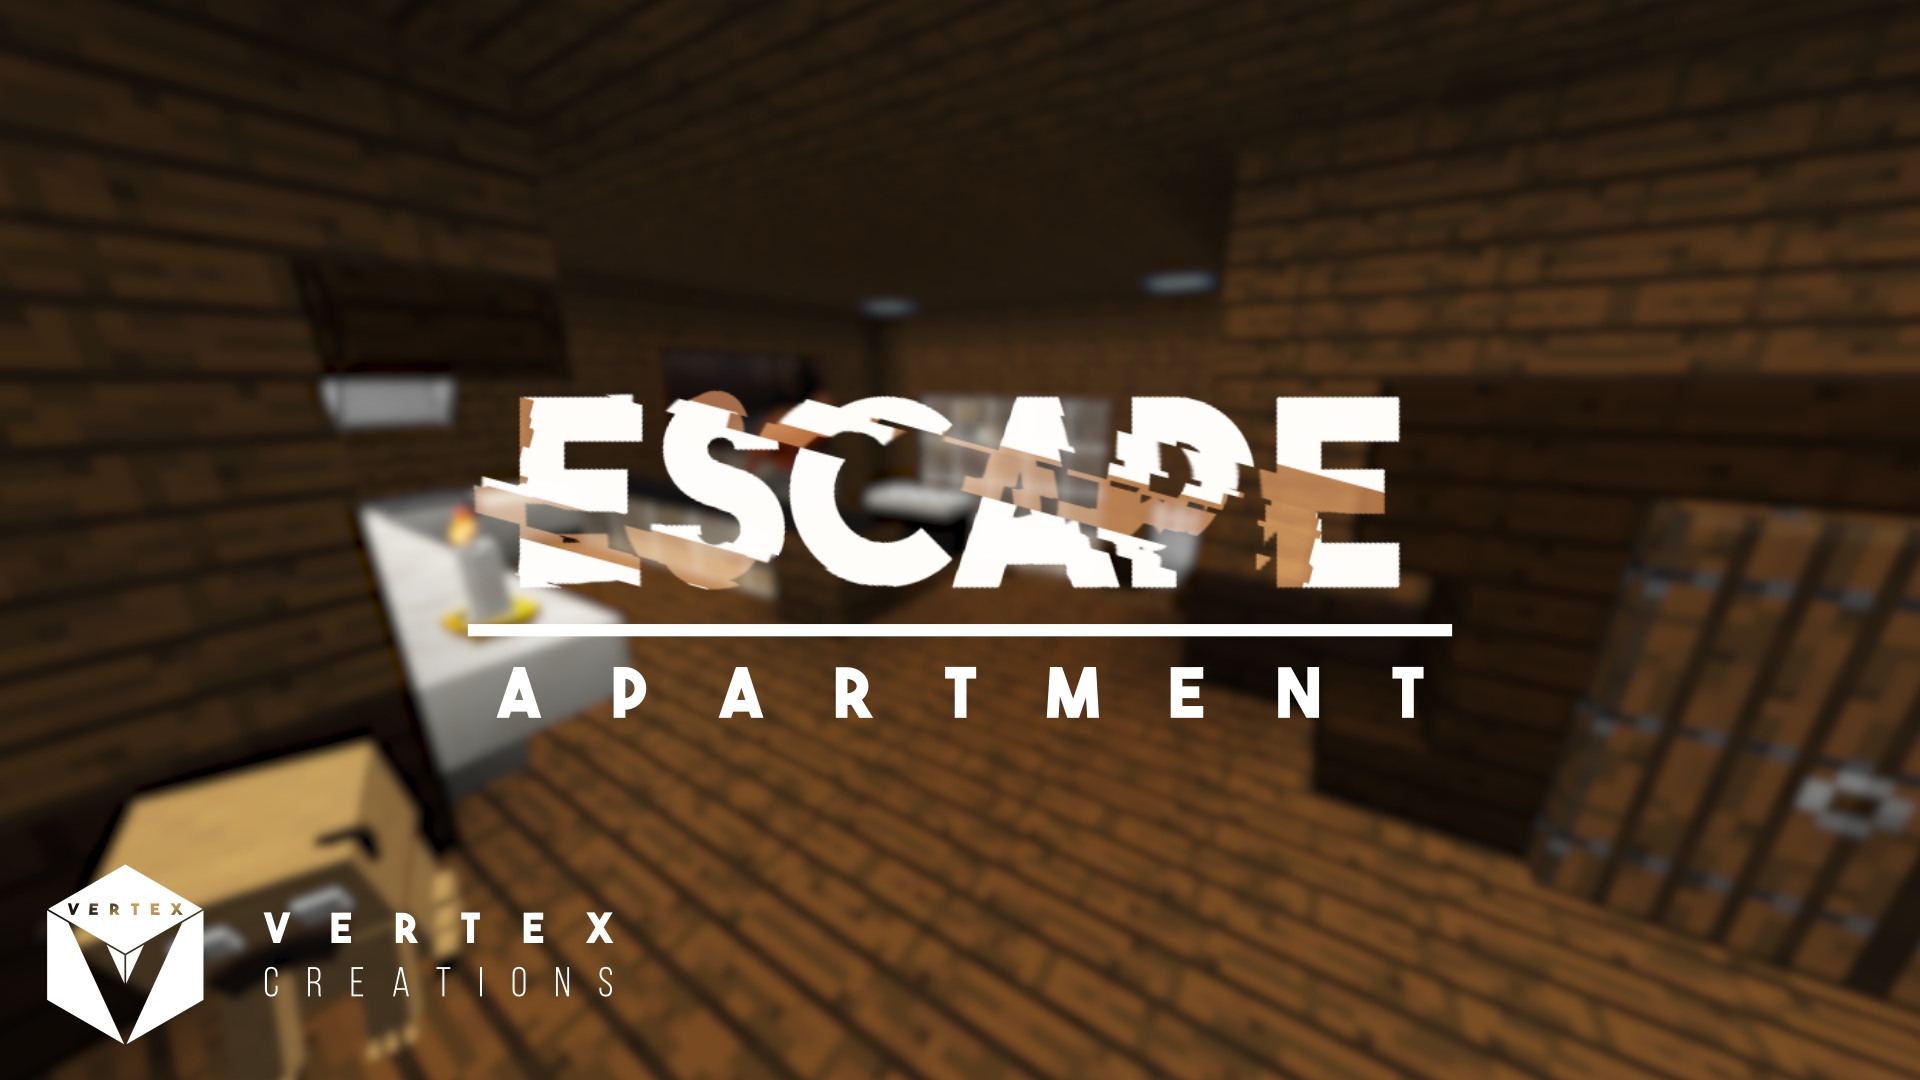 Escape: Apartment